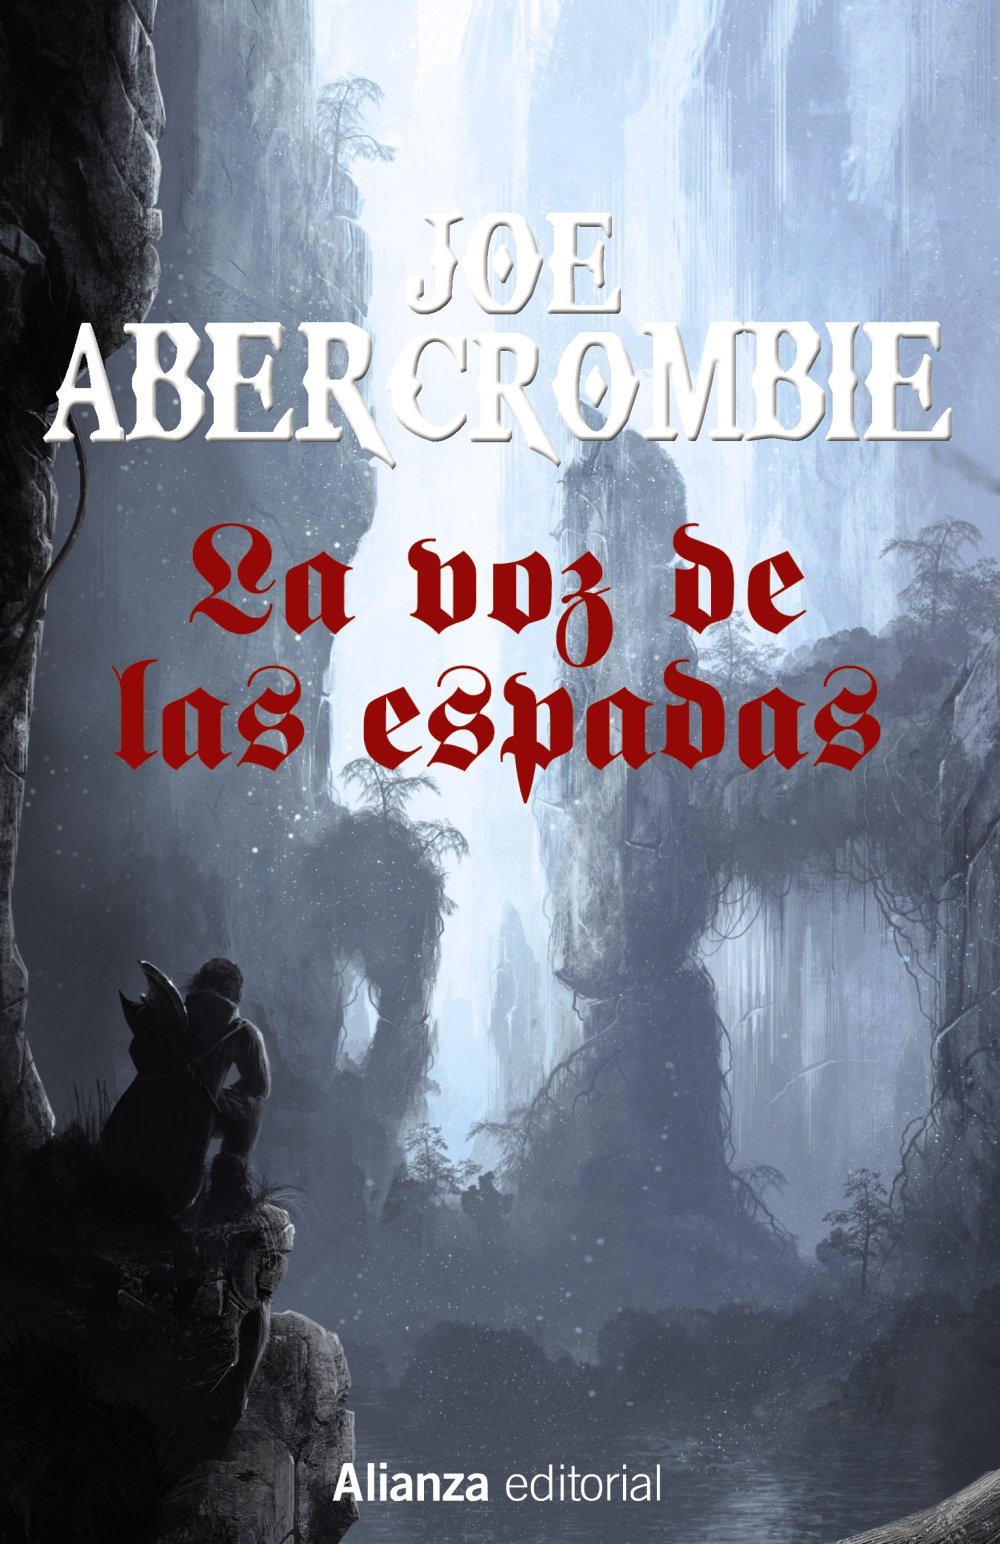 Joe Abercrombie: La Voz de las Espadas (Hardcover, Español language, Alianza Editorial)